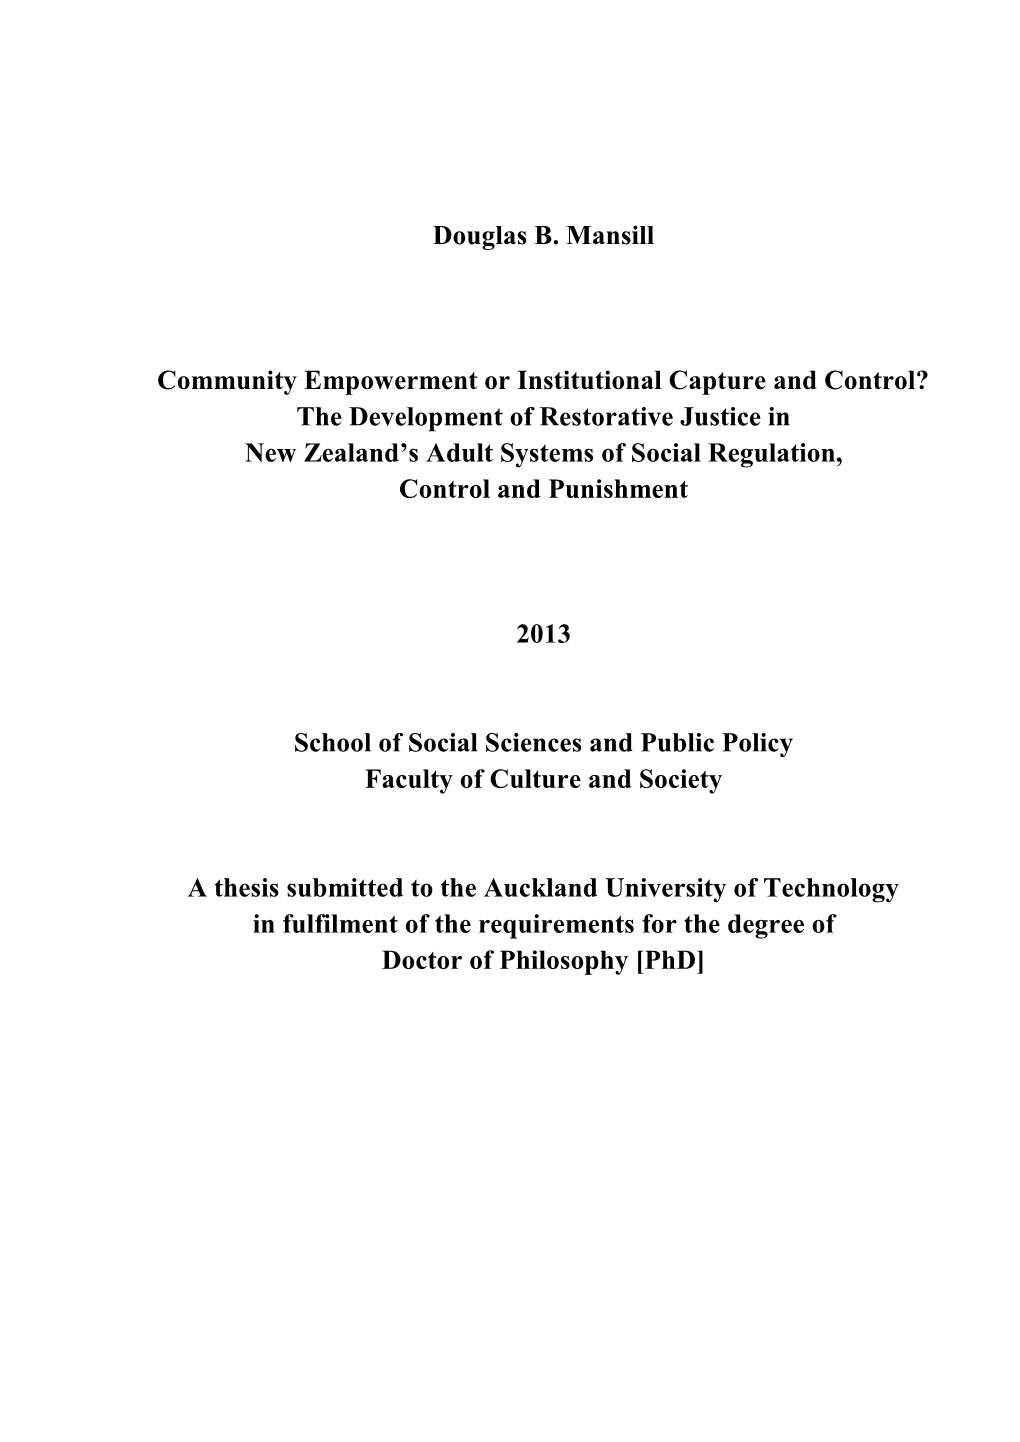 Douglas B. Mansill Community Empowerment Or Institutional